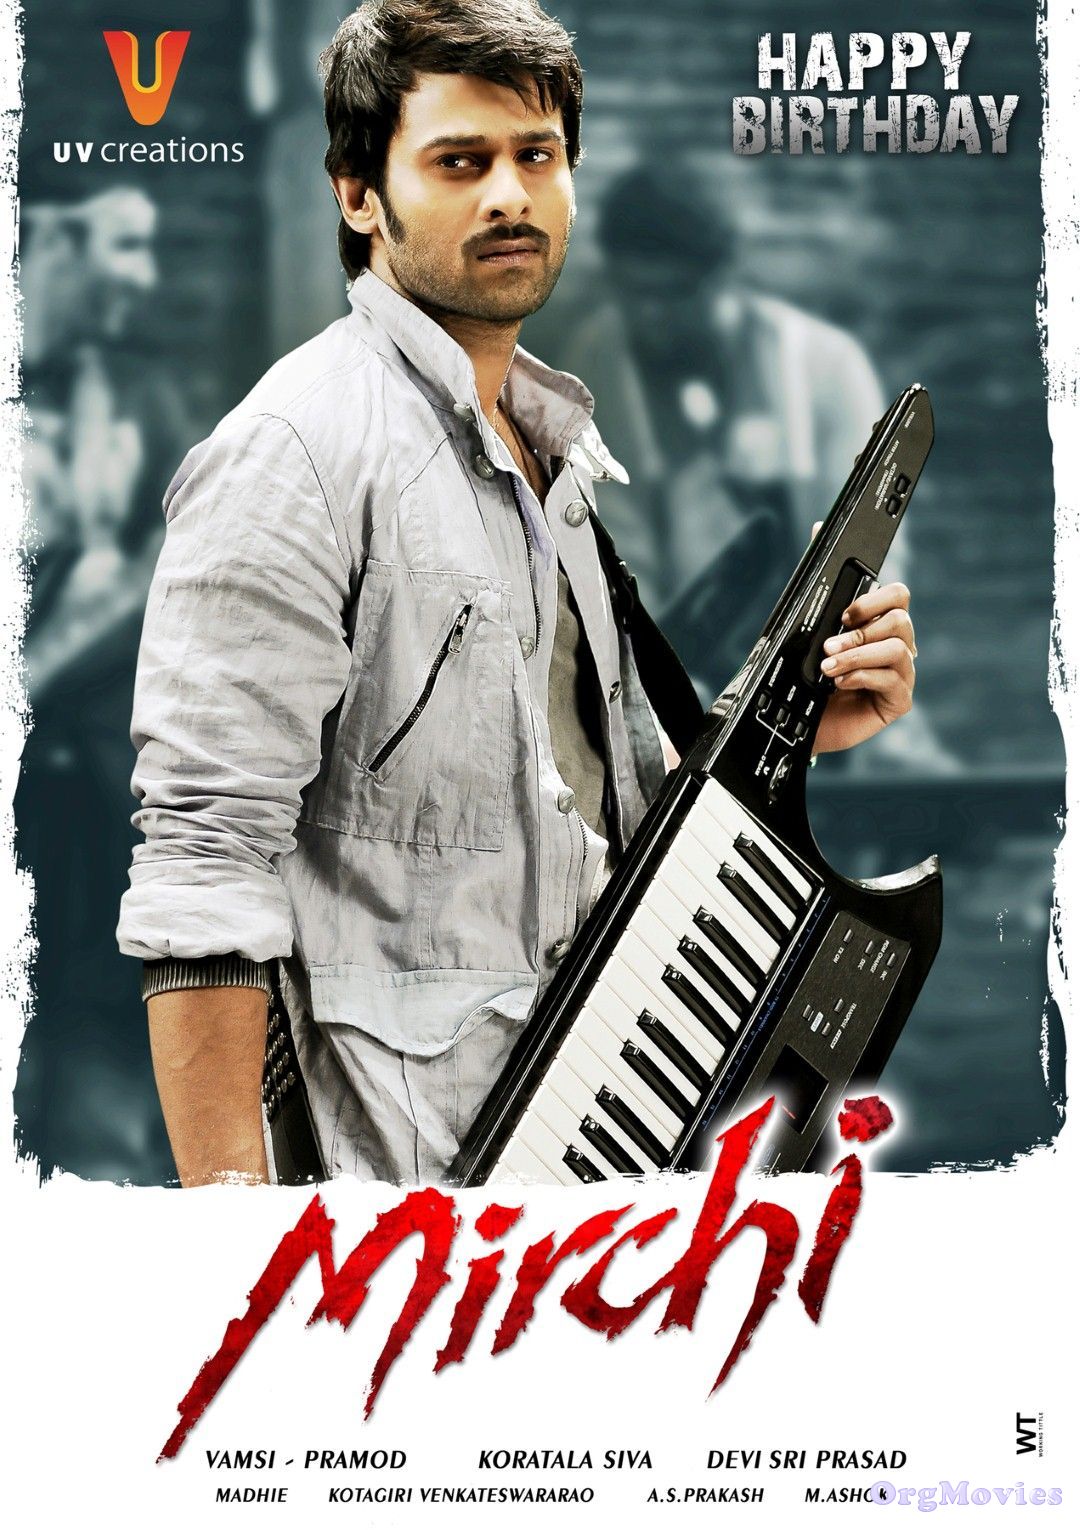 Khatarnak Khiladi (Mirchi) Hindi Dubbed download full movie